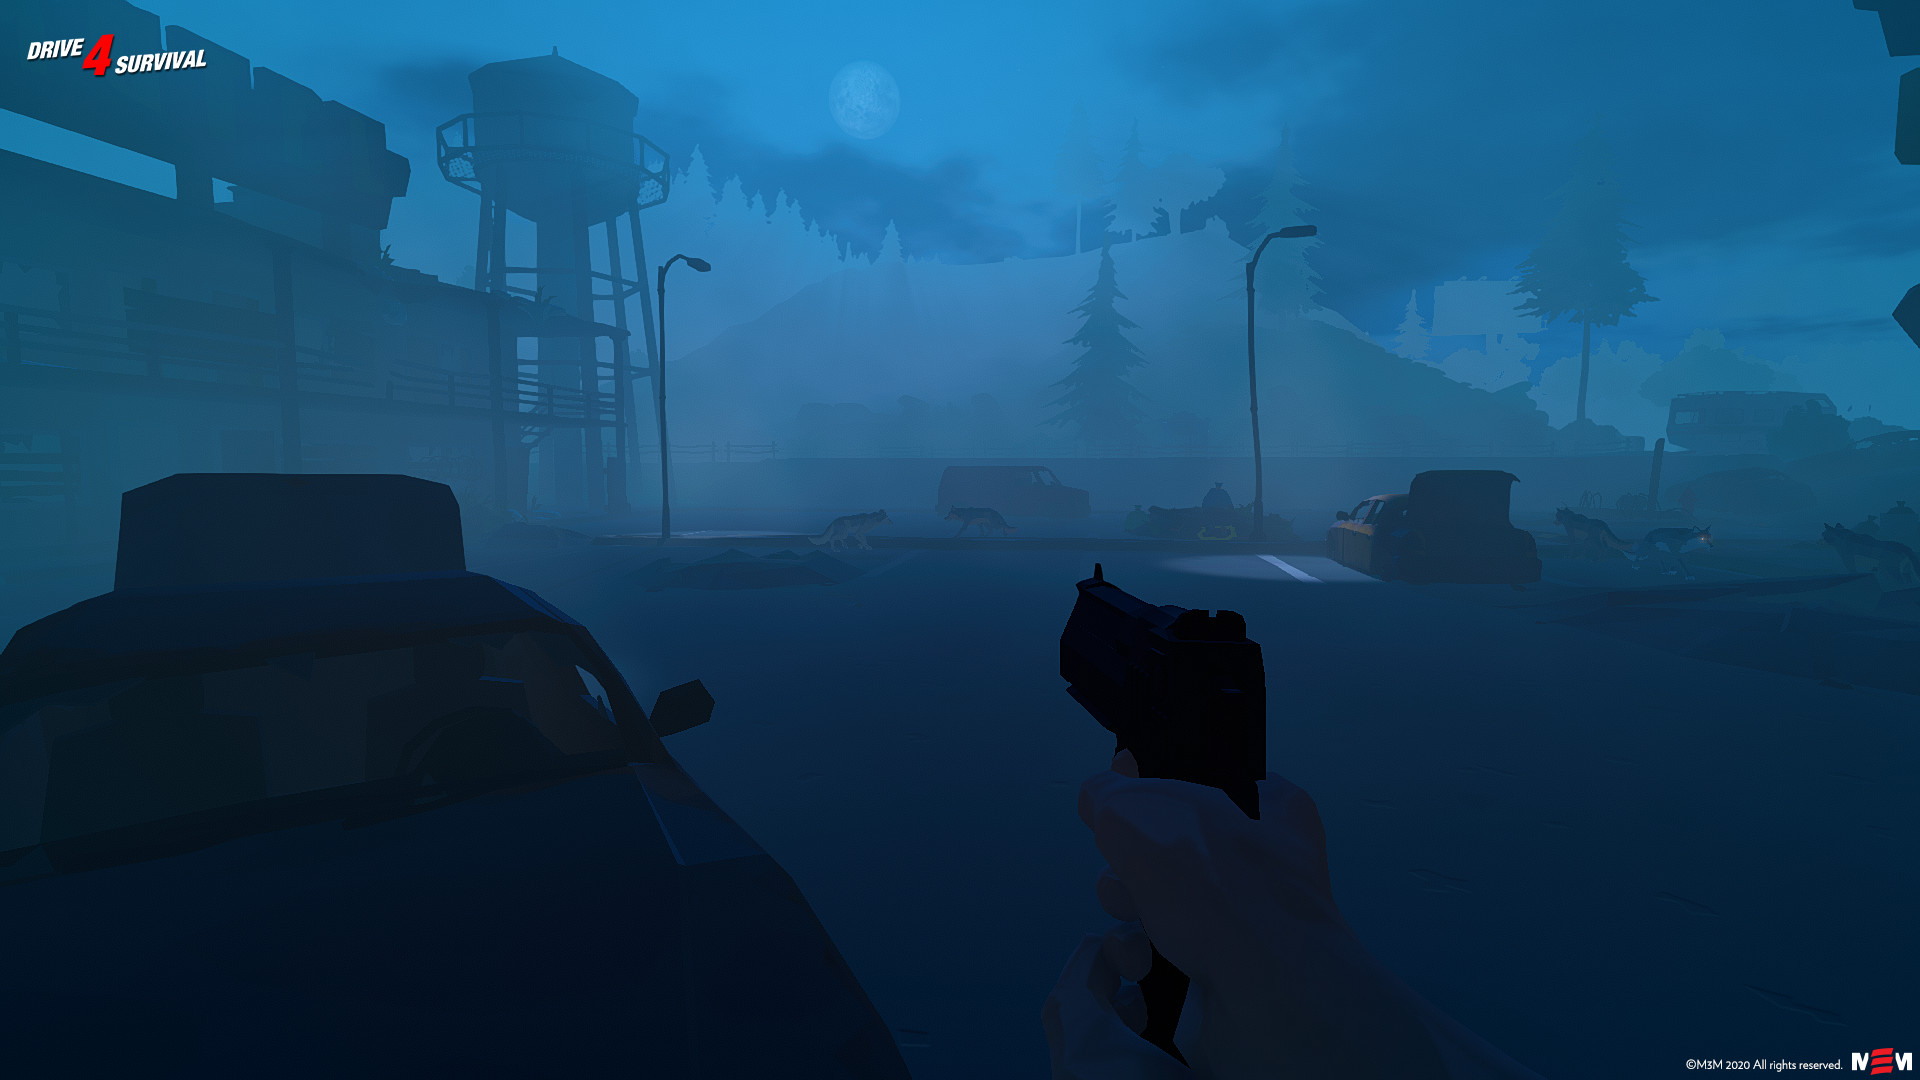 Drive 4 Survival - screenshot 5